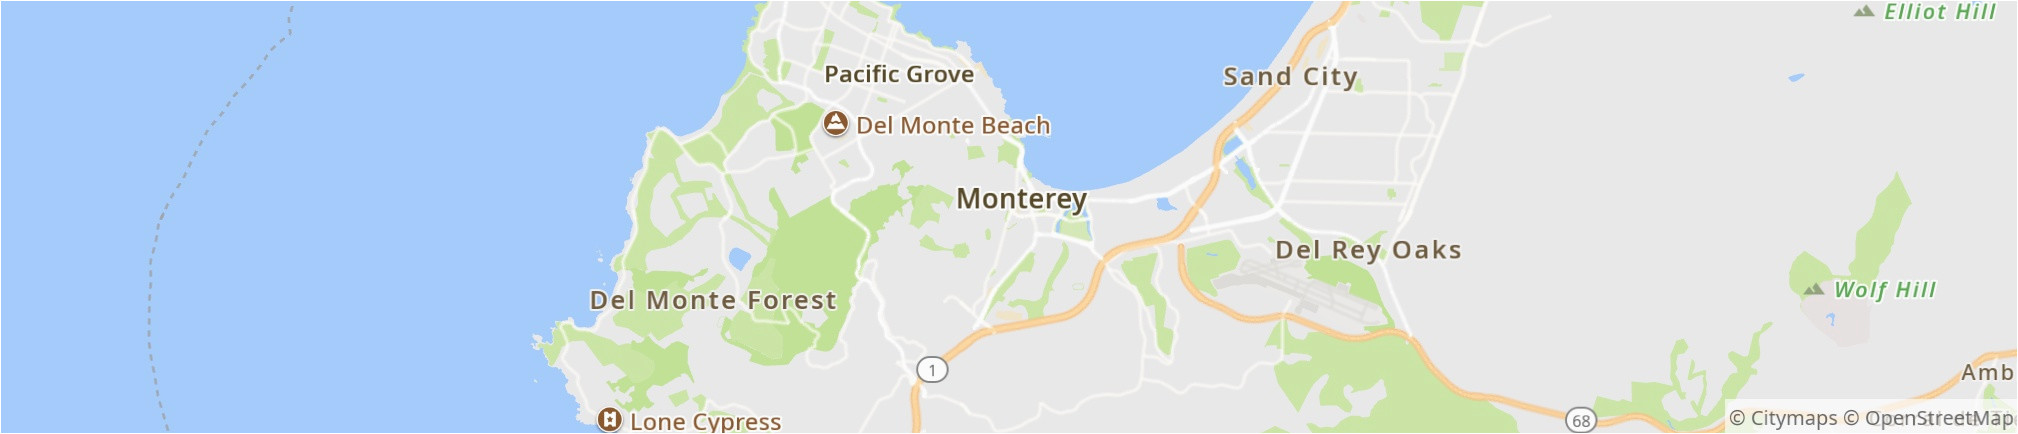 monterey tourism 2019 best of monterey ca tripadvisor